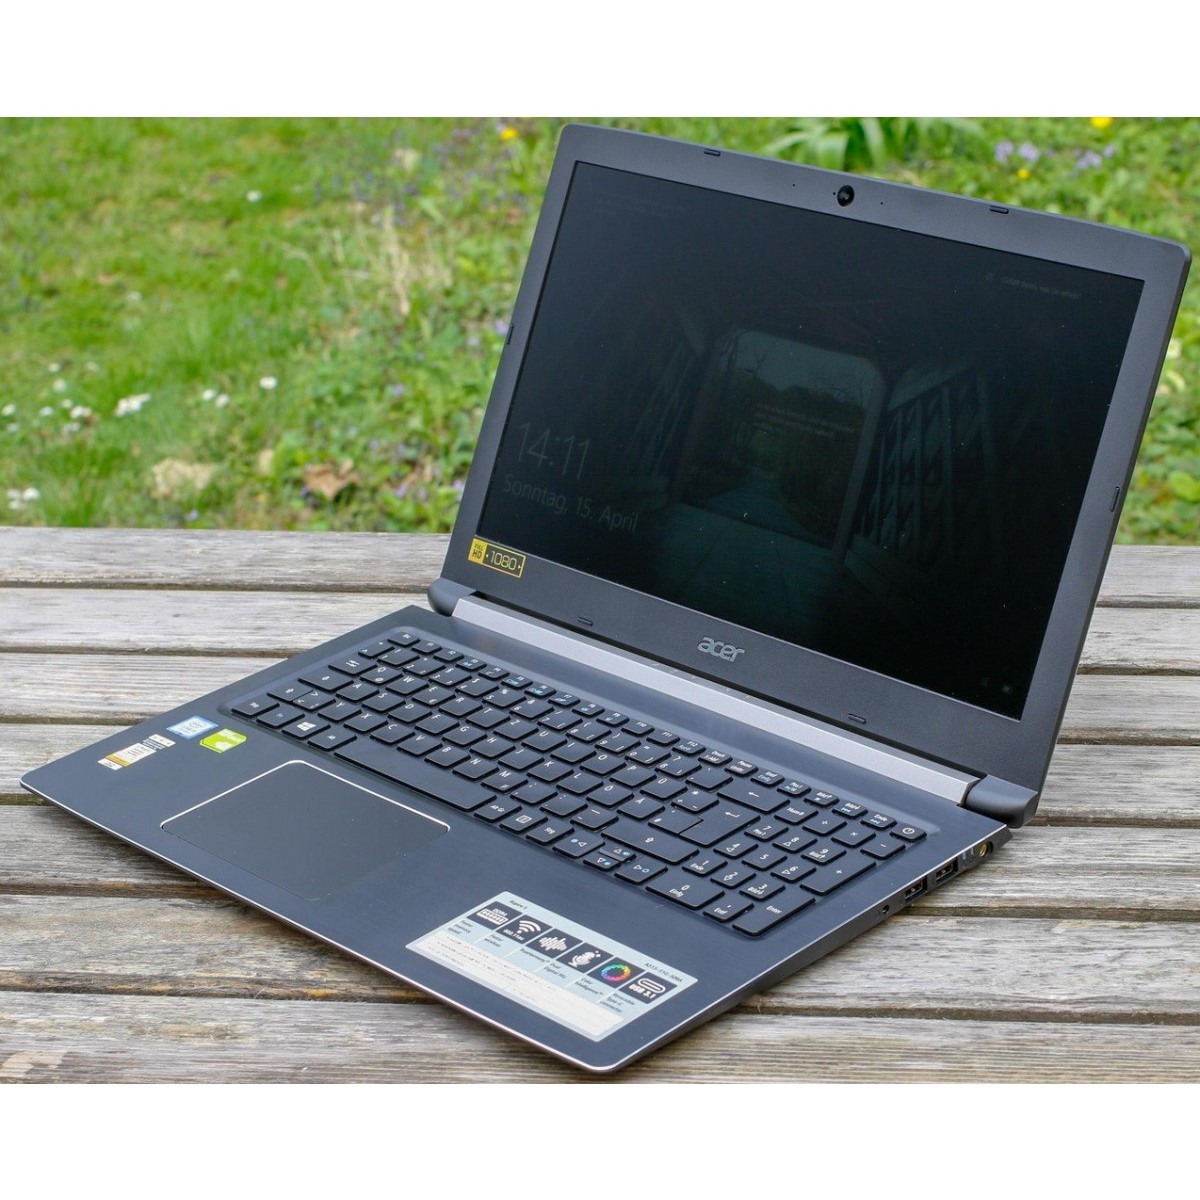 Acer aspire v5-573g-54218g1taii user manual